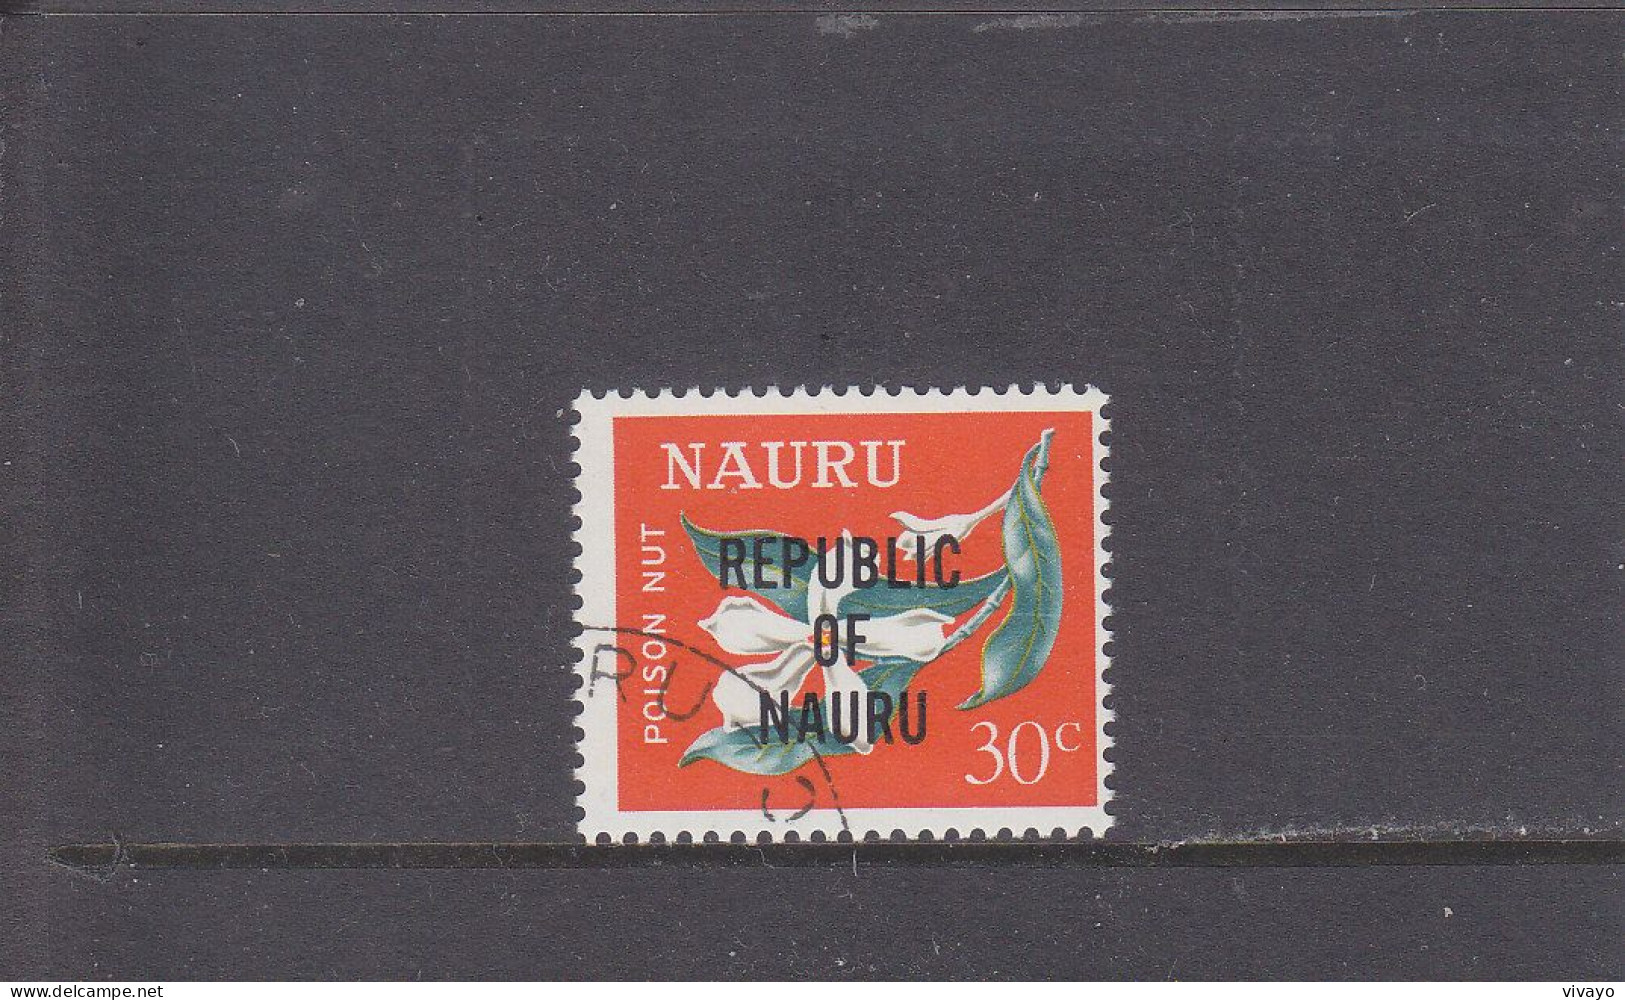 NAURU - O / FINE CANCELLED - 1968 - FLOWERS - OVERPRINT REPUBLIC - Yv. 79 - Mi. 79 - Nauru